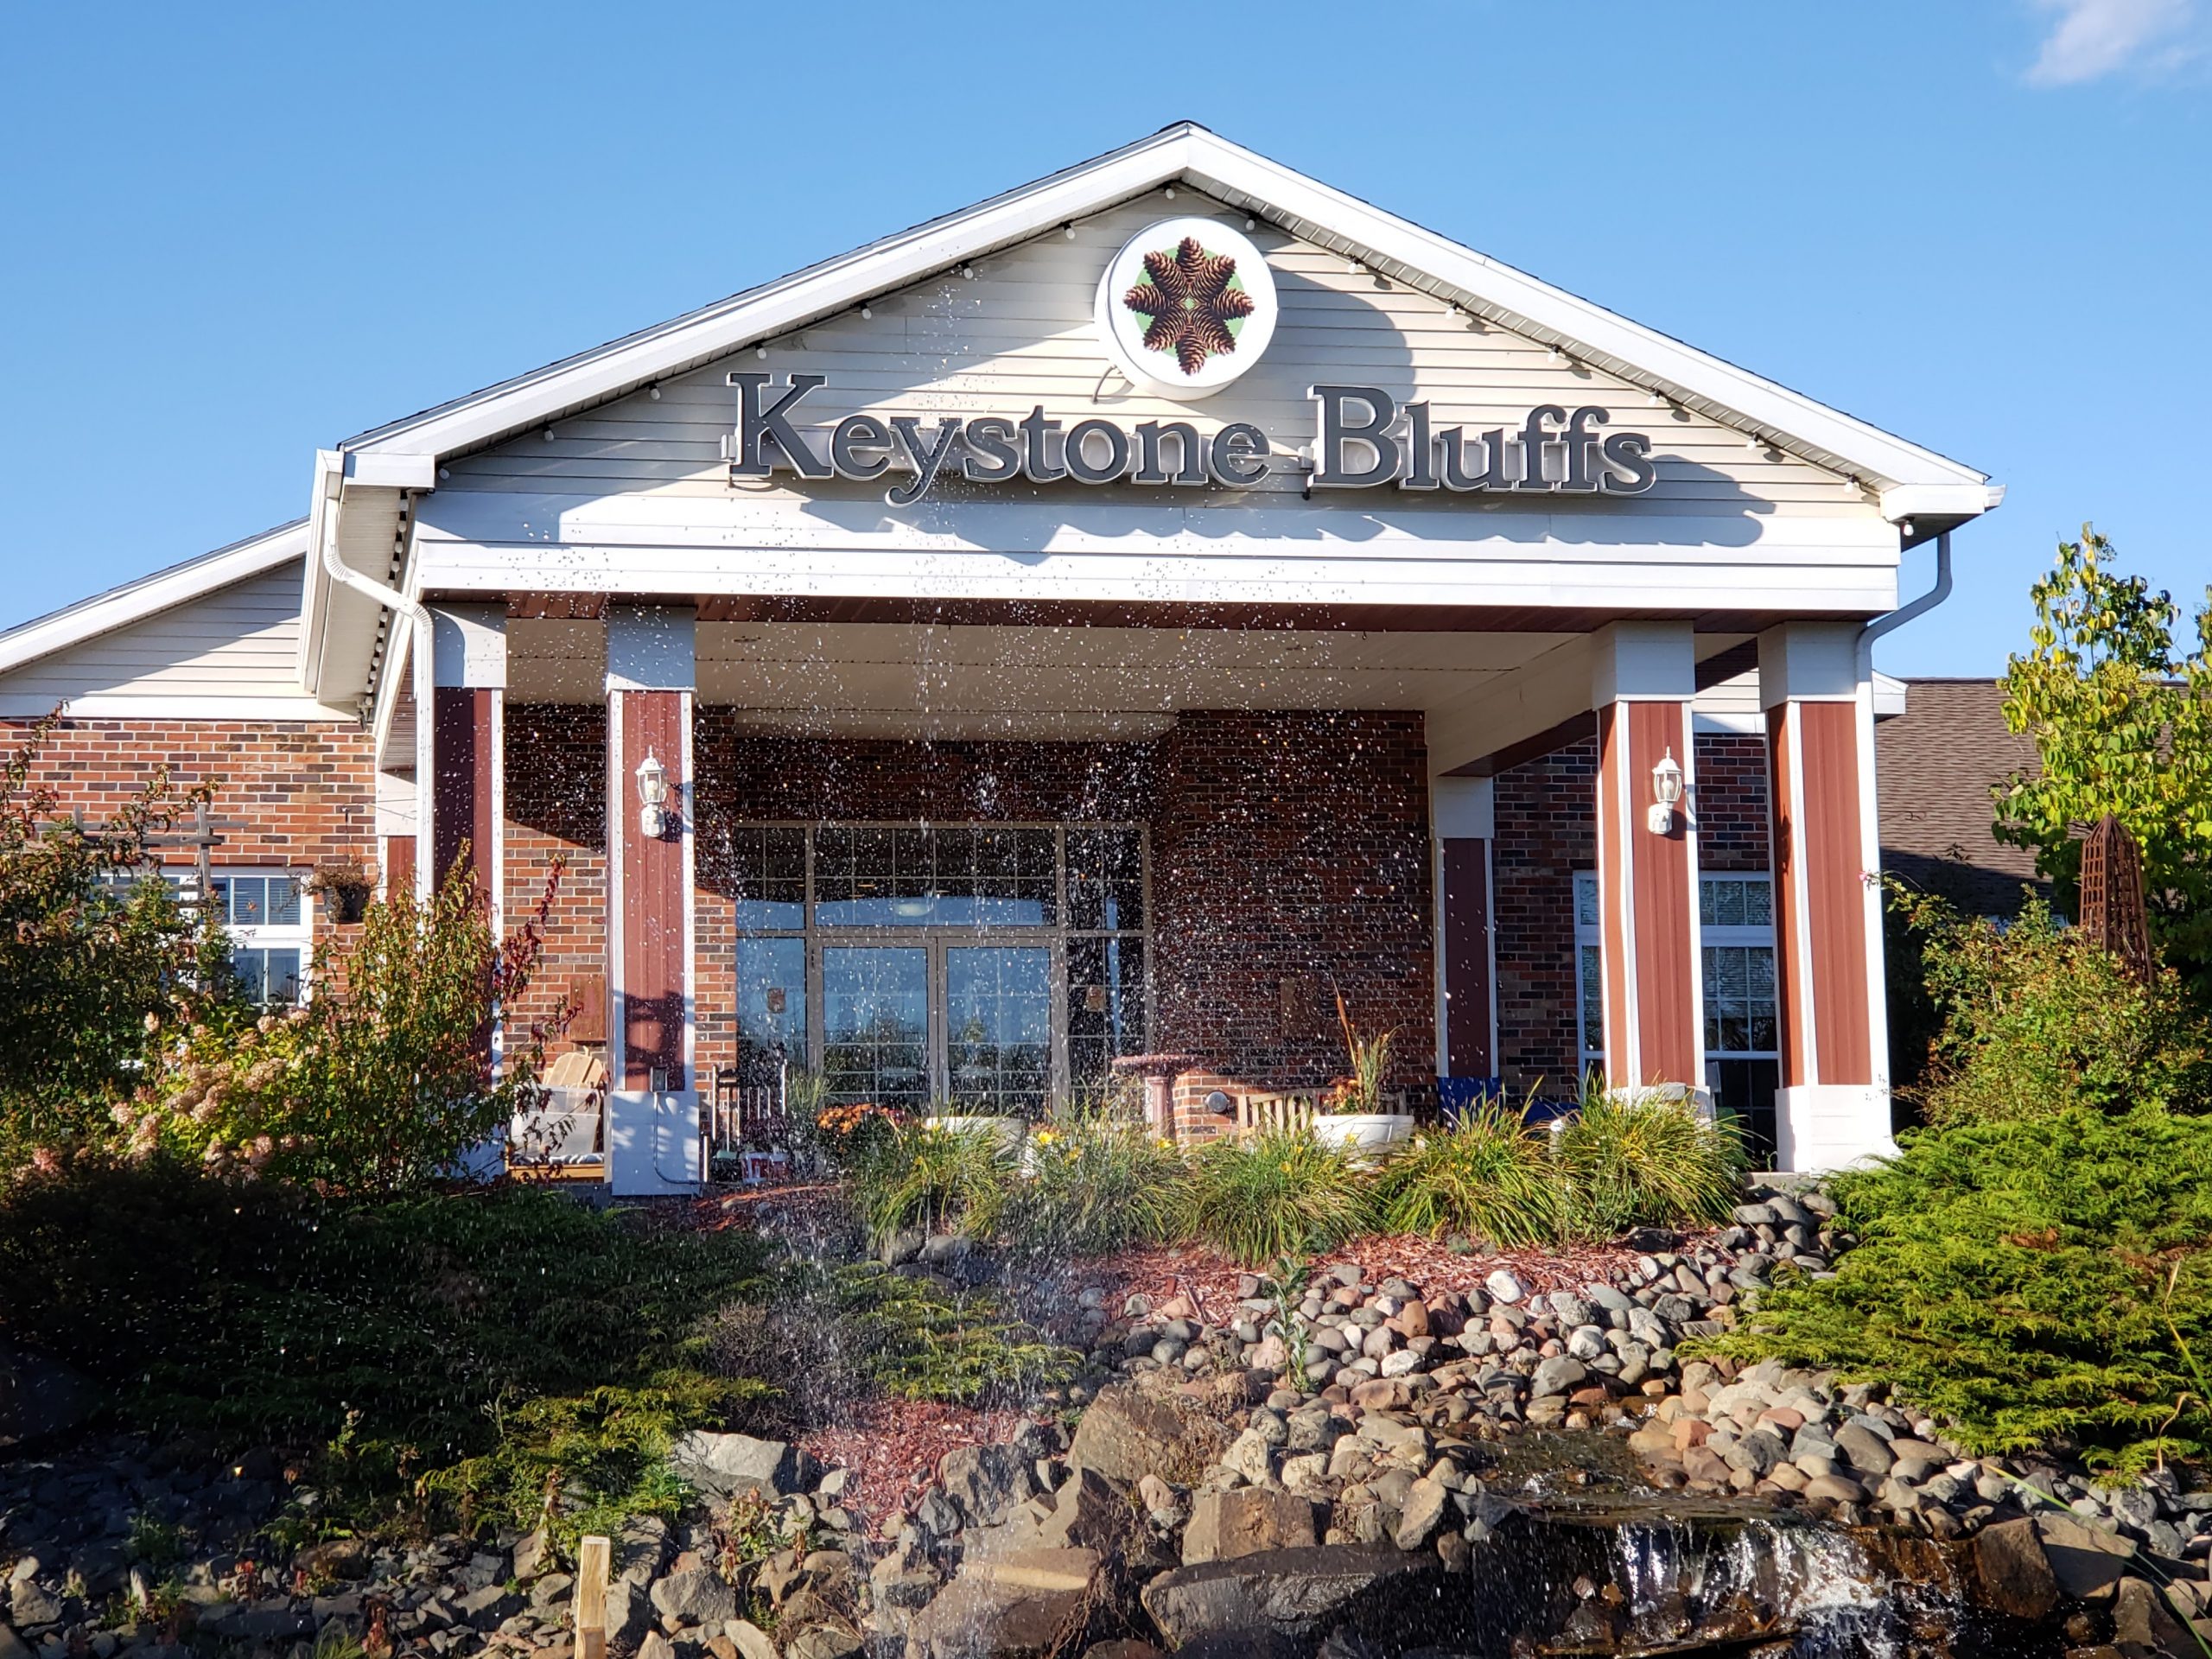 Keystone Bluffs Assisted Living